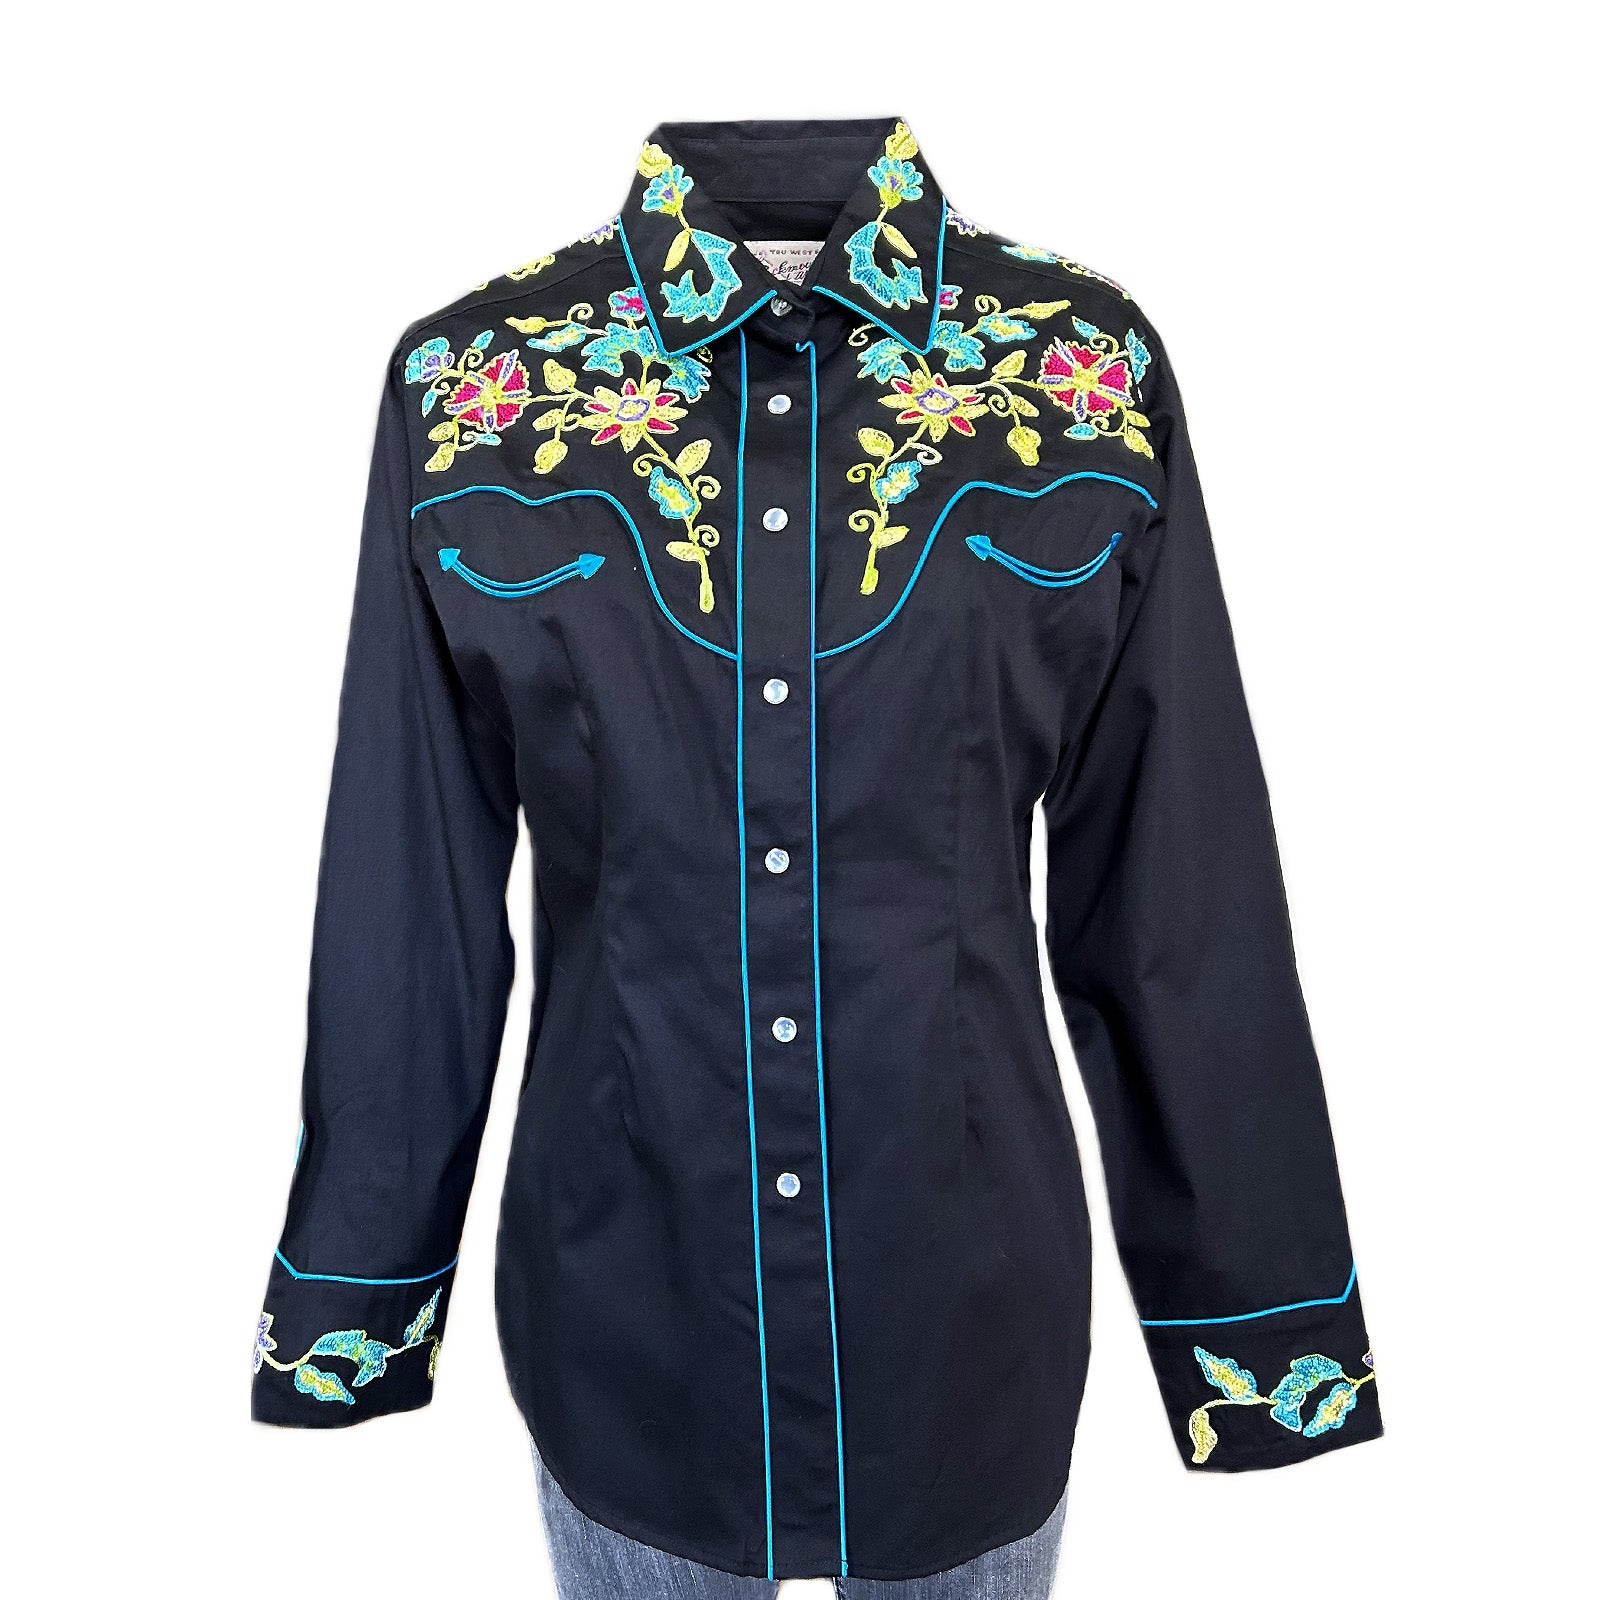 Rockmount Women's Vintage Floral Embroidered Western Shirt